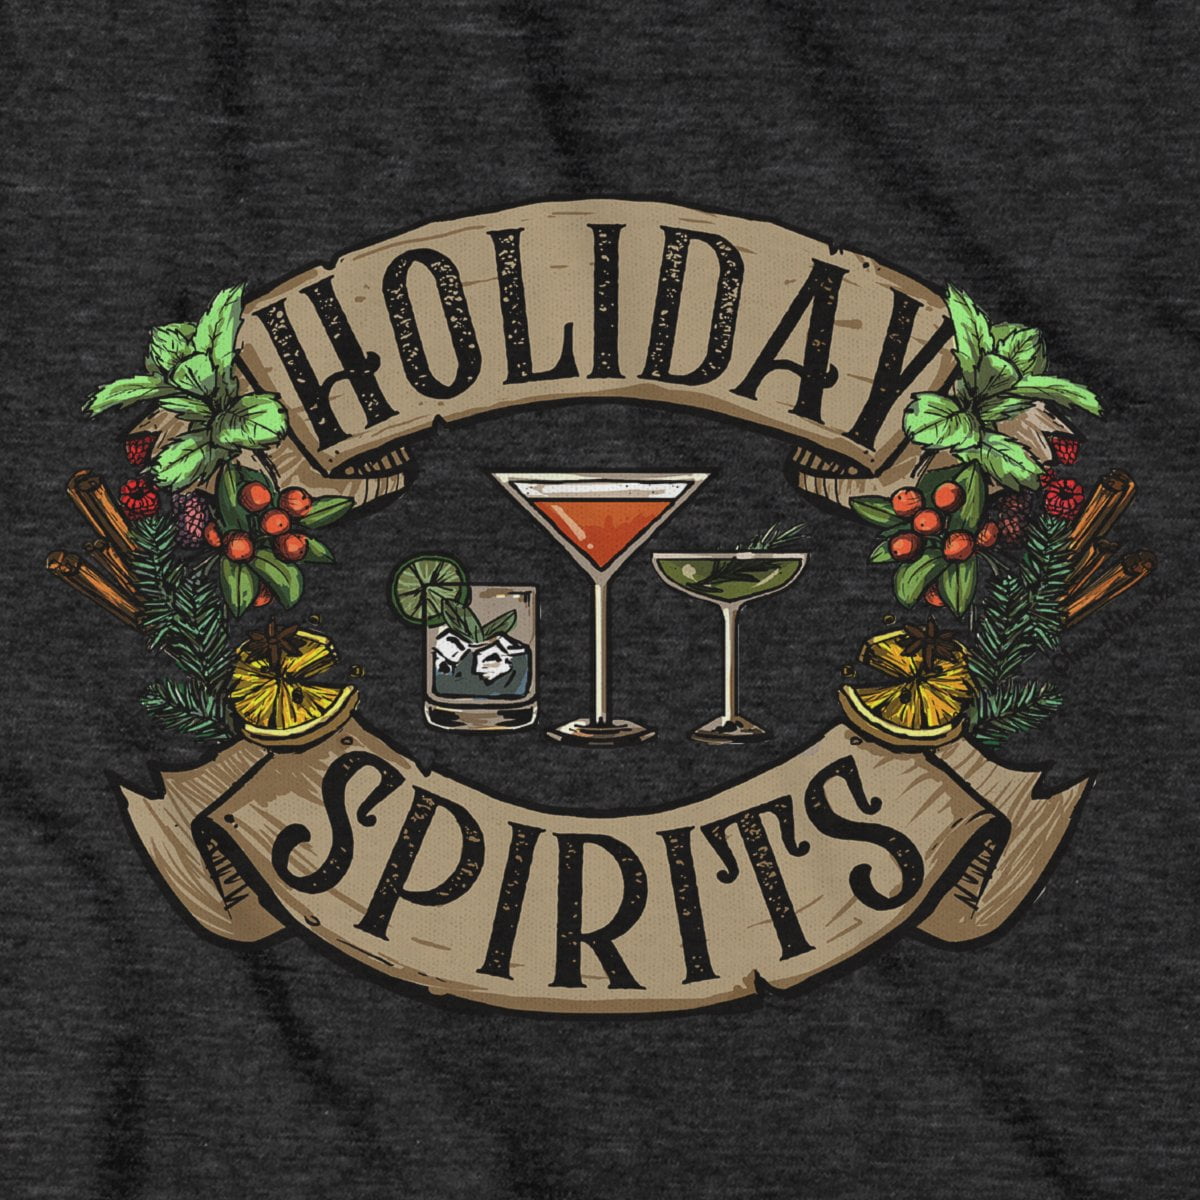 Holiday Spirits T-Shirt - Chowdaheadz